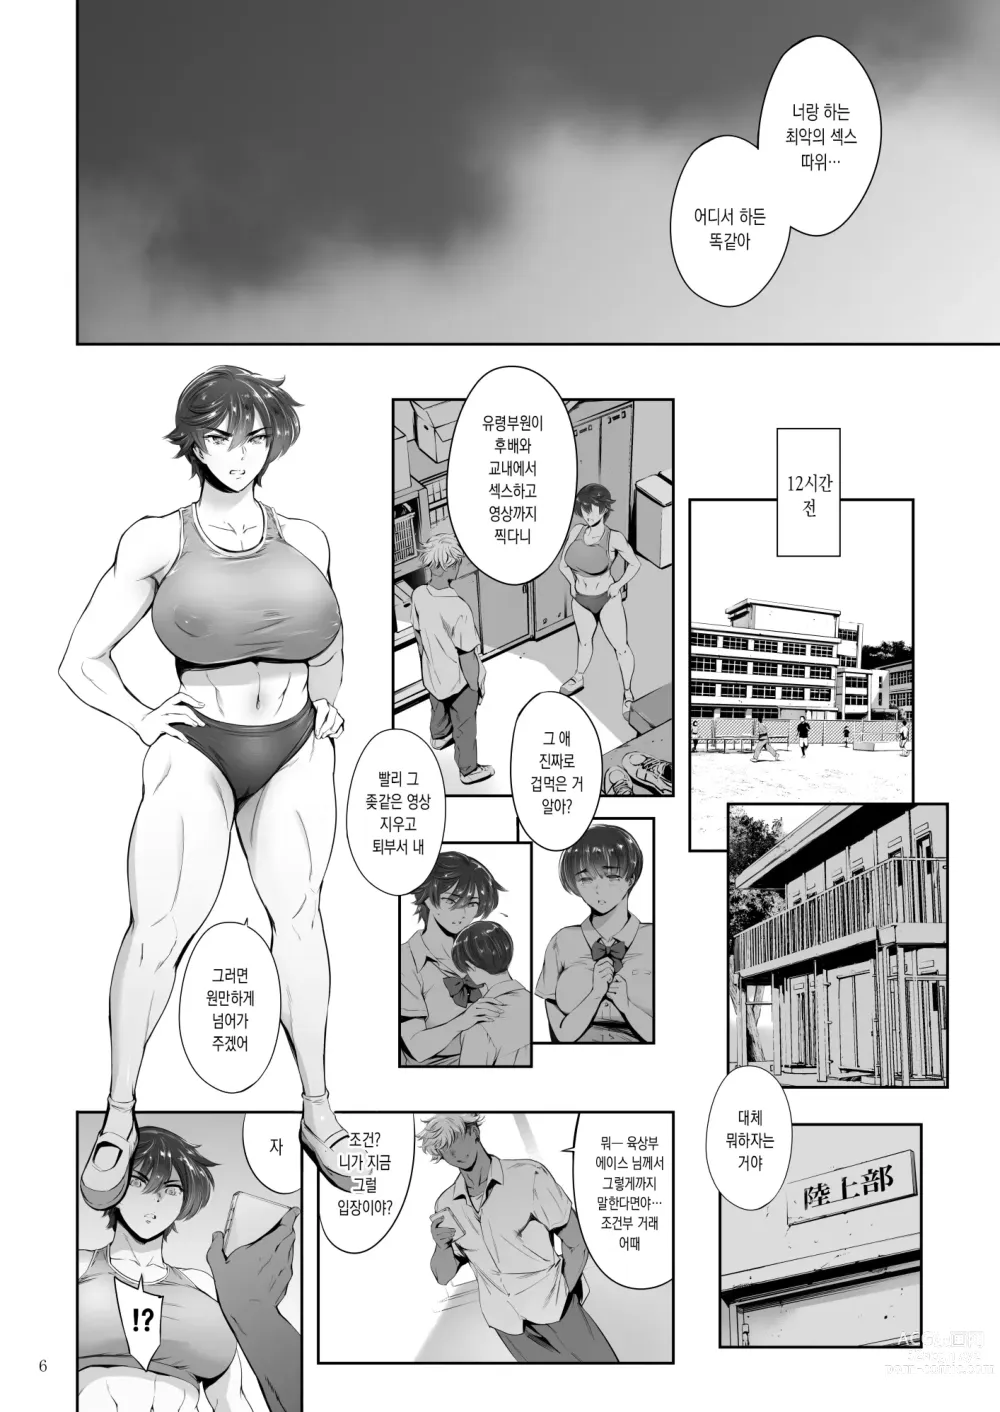 Page 7 of doujinshi 내닫는 여자